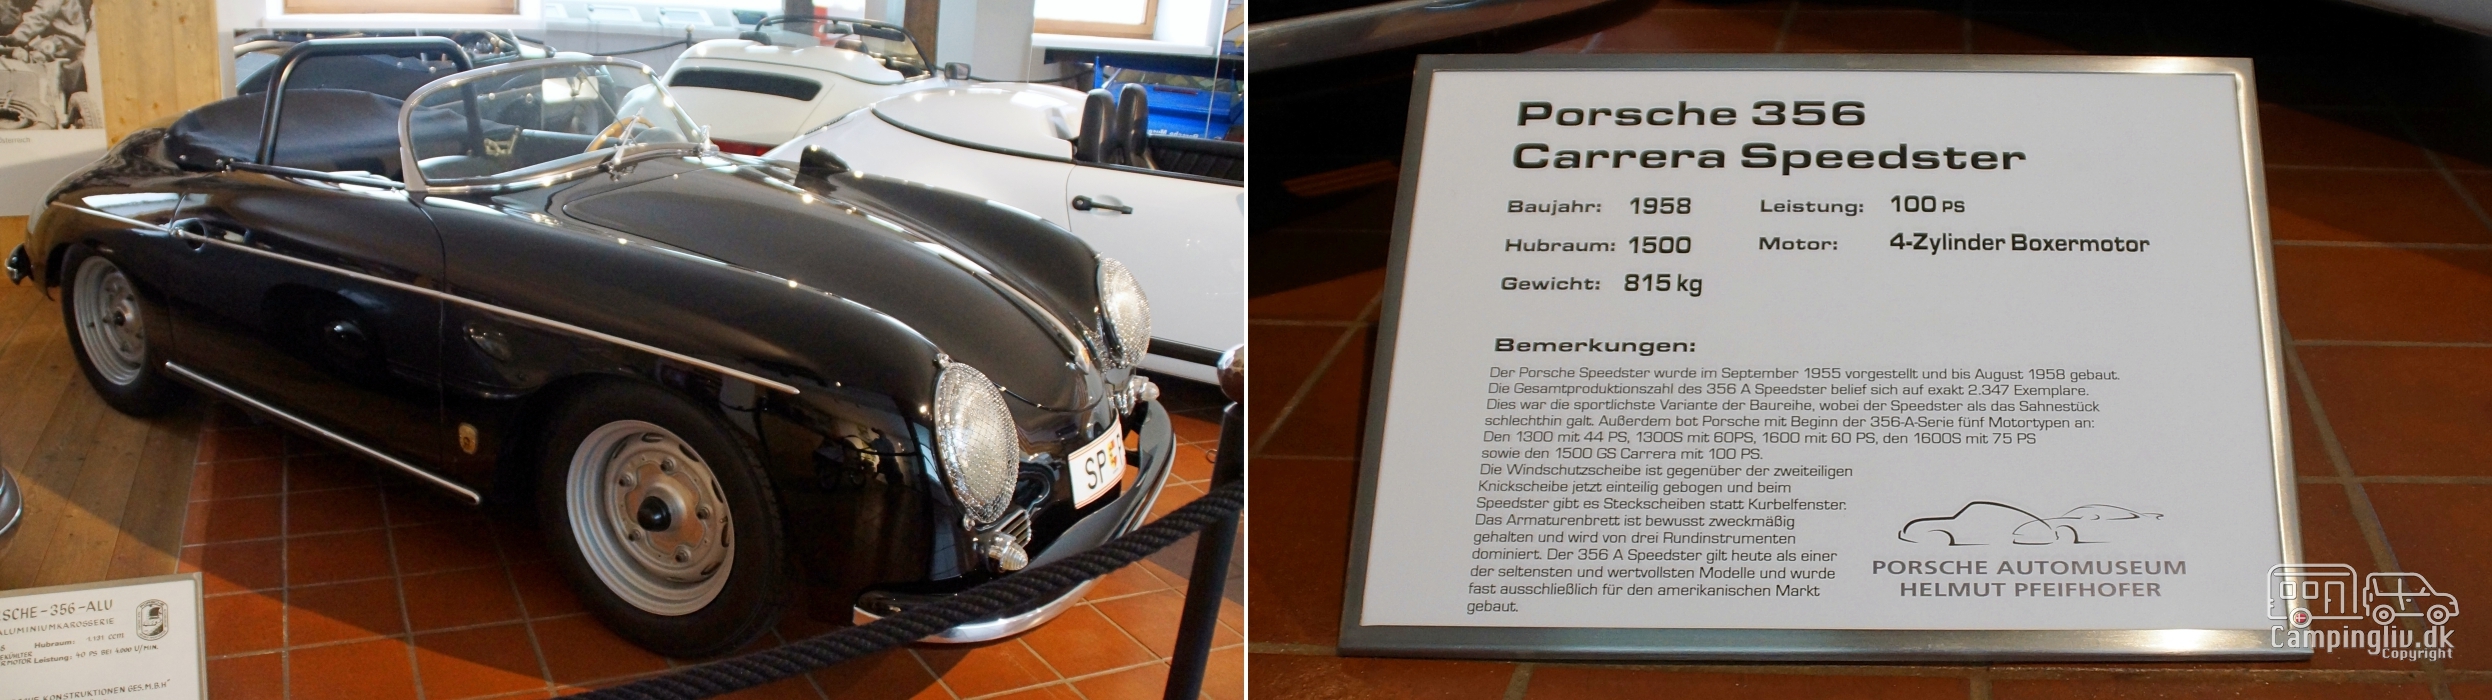 Porsche-Museum_Gmünd_Austria